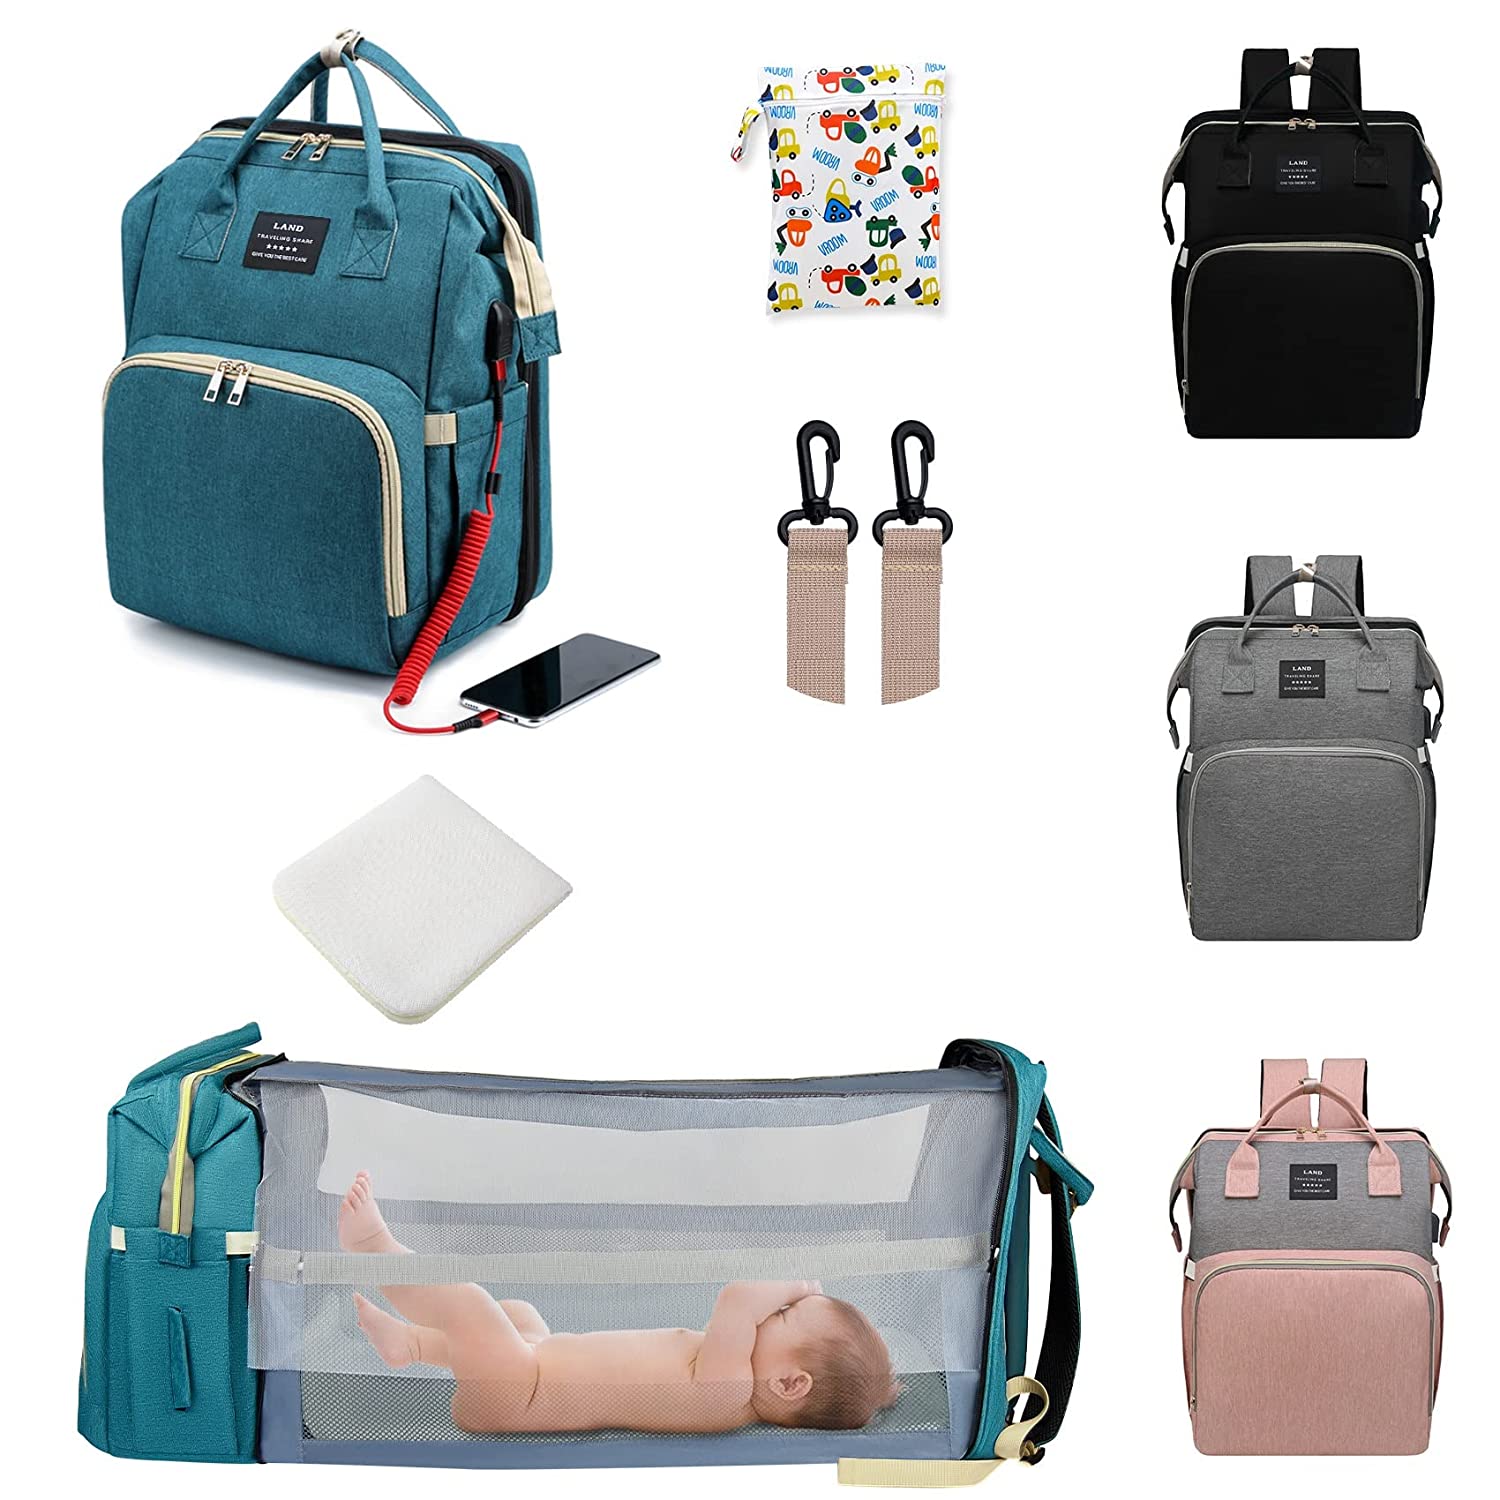 ANWTOTU Travel Diaper Bag